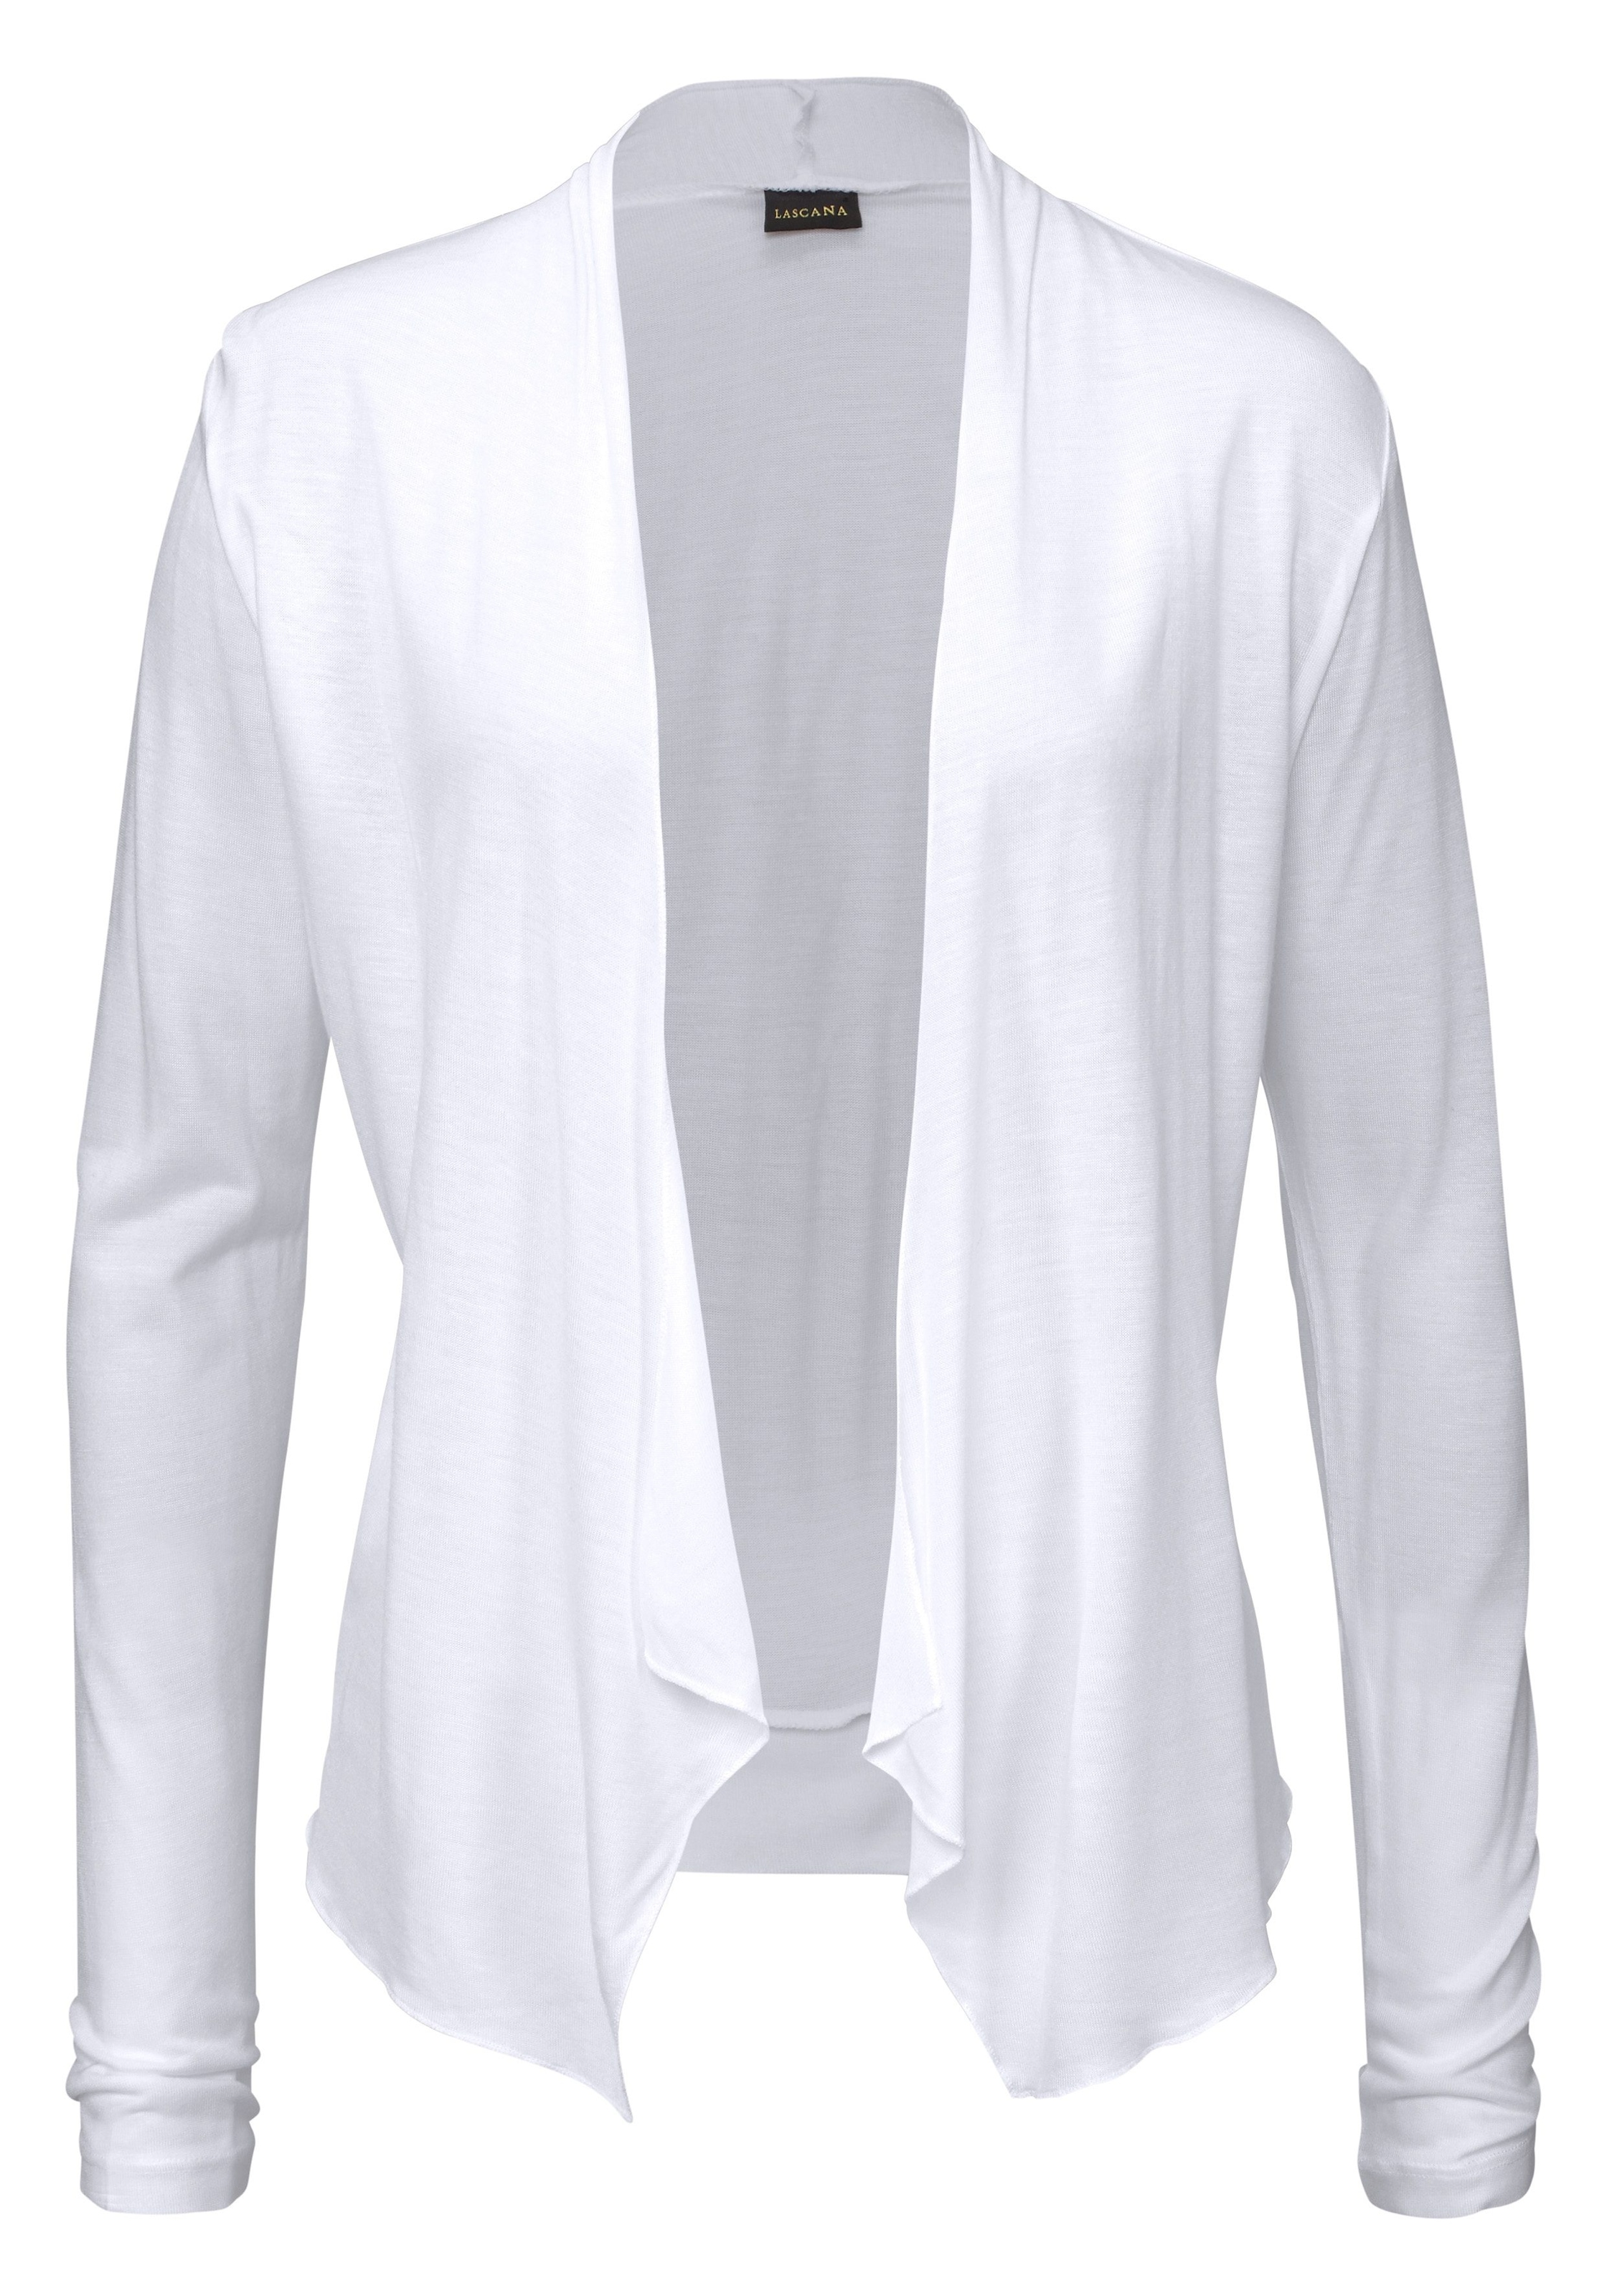 LASCANA Shirtjacke, in offener Form, & Unterwäsche aus online Lingerie LASCANA Cardigan kaufen Bademode, Jersey, | Sommerjacke, Strickjacke »